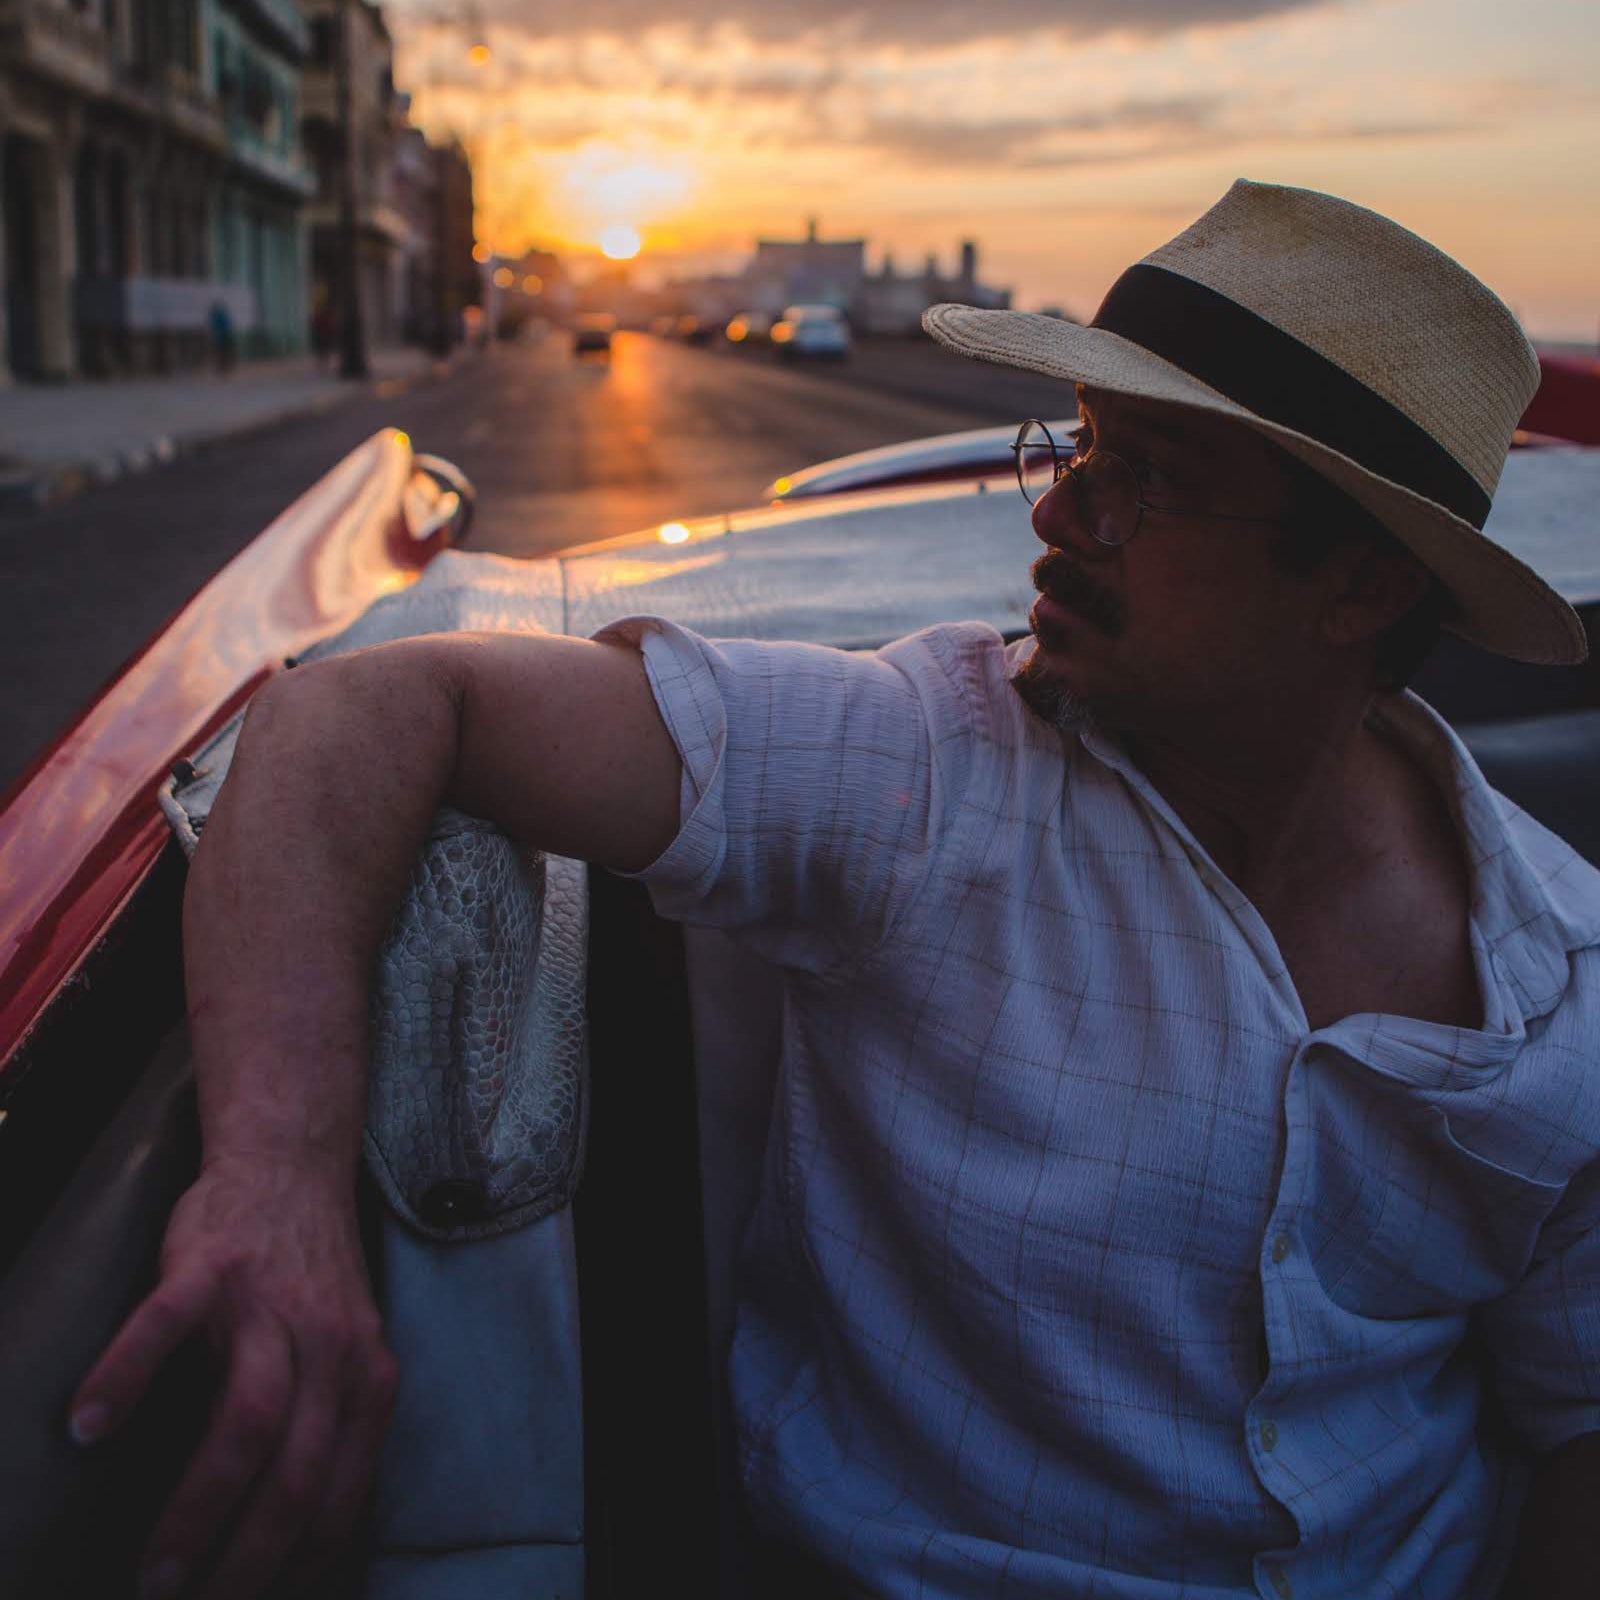 Gardner Tours Cuba Tours Premium Cuba Cigar Tour 5 Star TripAdvisor Review by Jeff Baranowski riding in a classic car in Havana at sunset